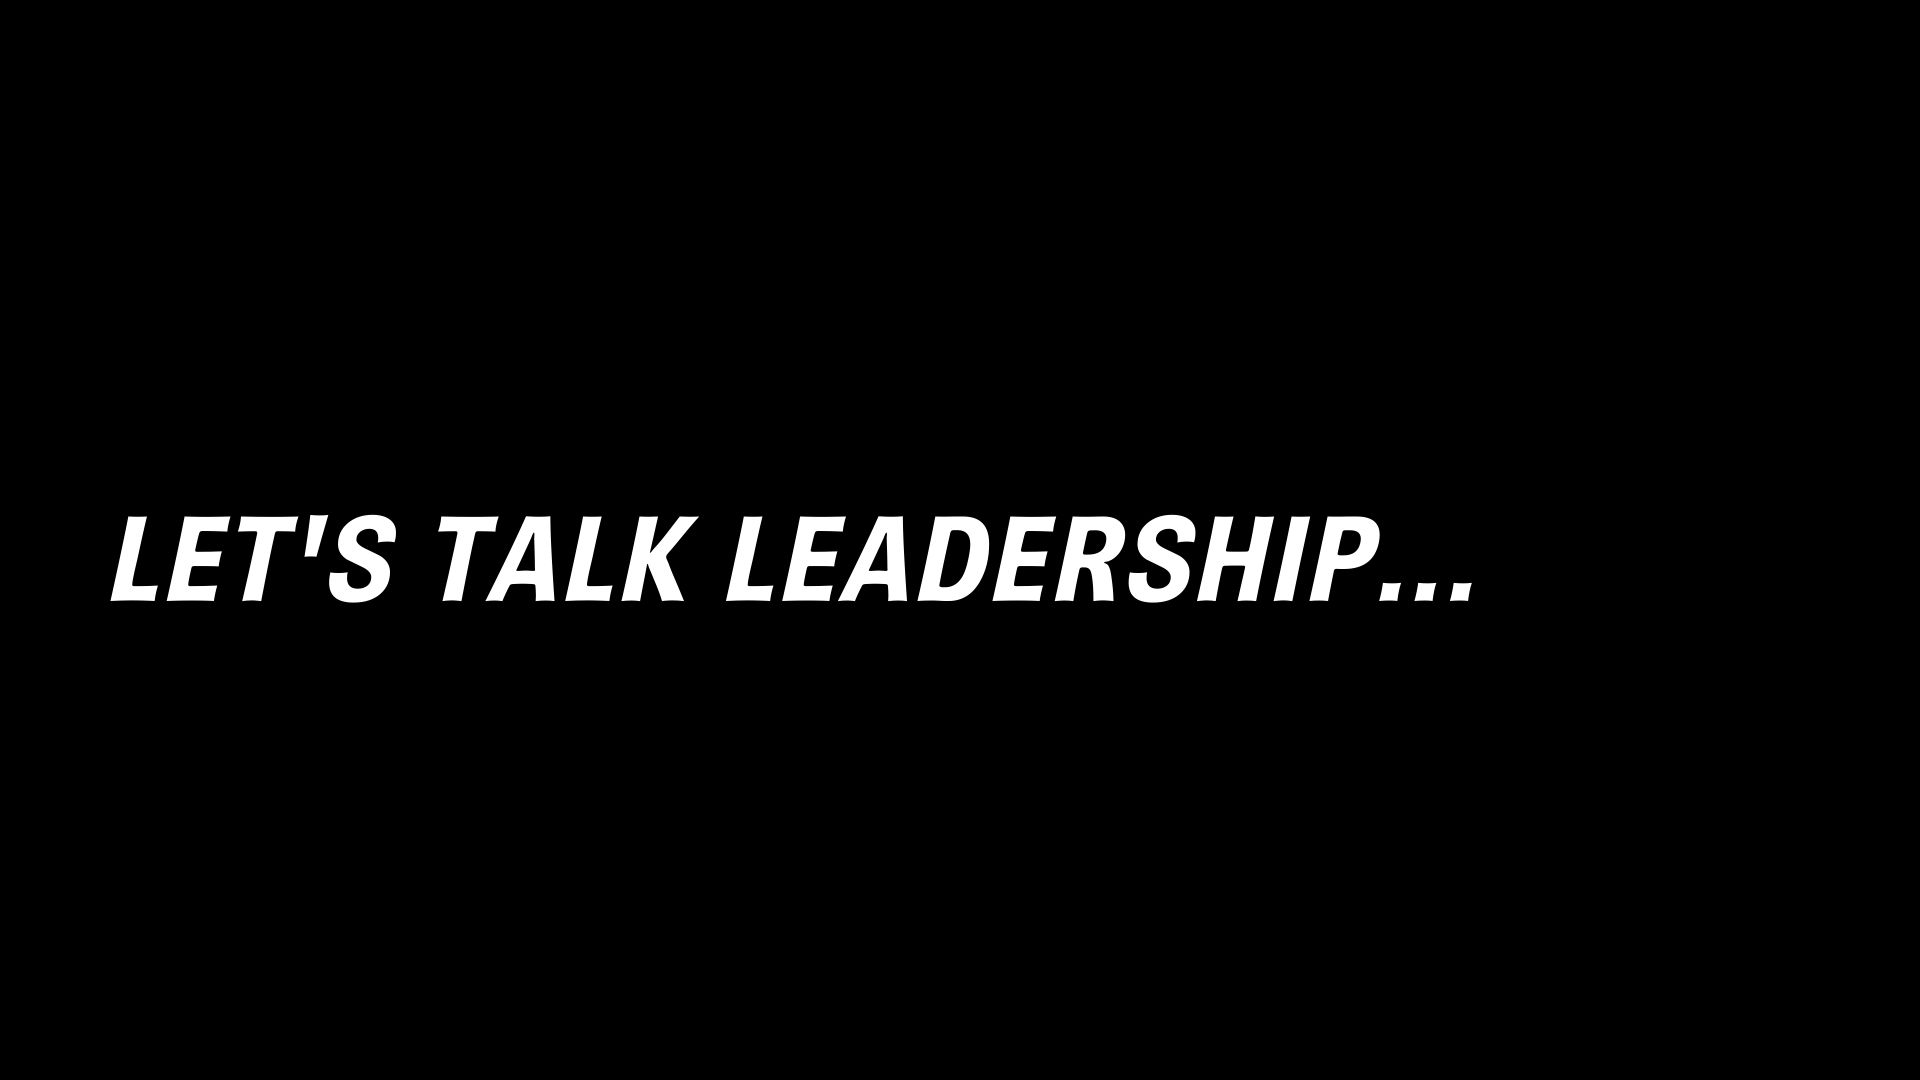 LET'S TALK LEADERSHIP....